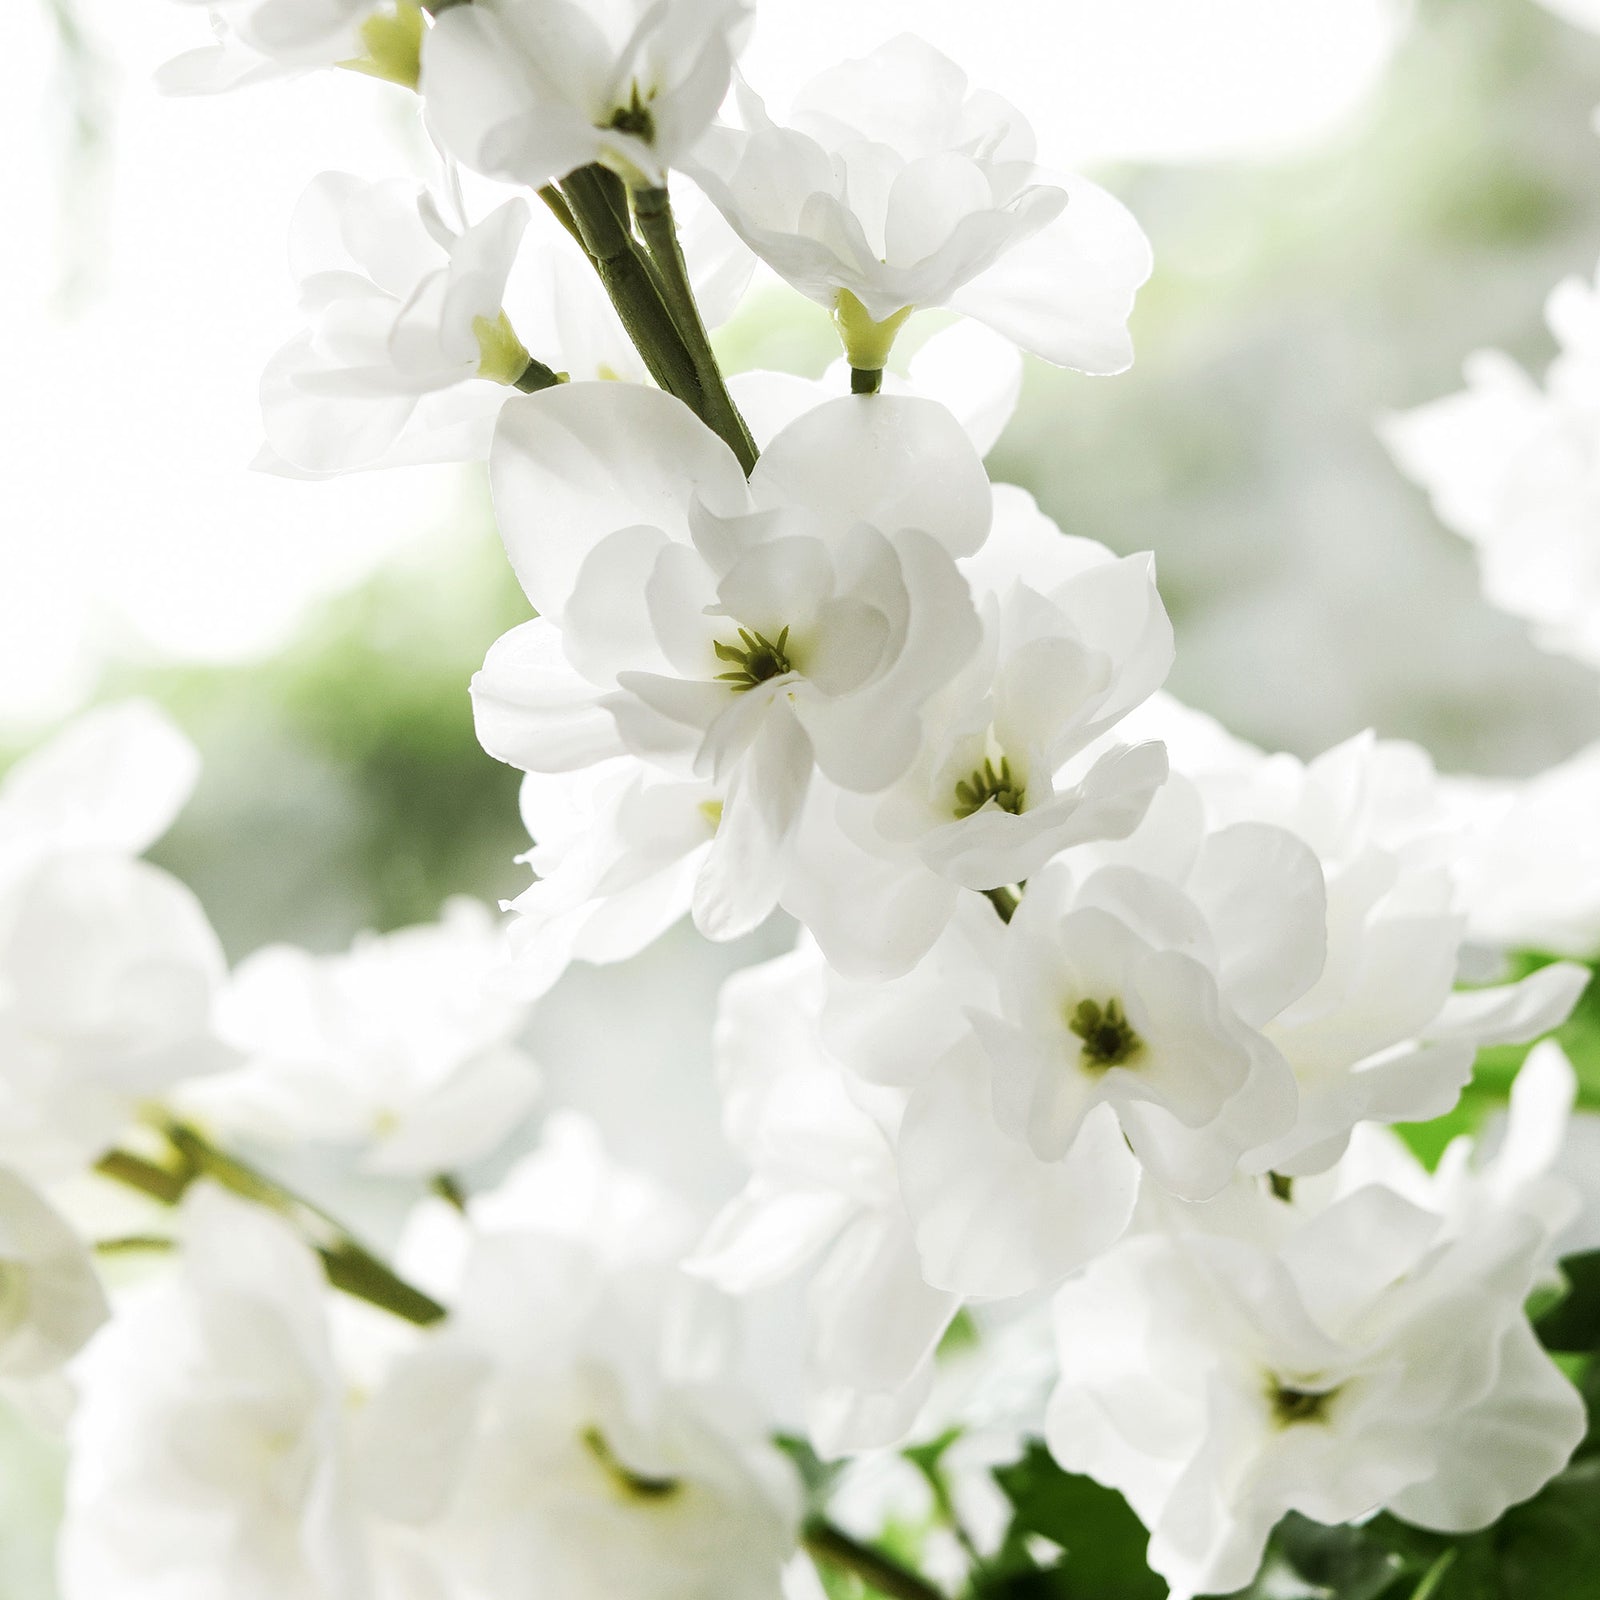 Real Touch Delphinium White Artificial Flowers, Wildflower Arrangements 6 Stems